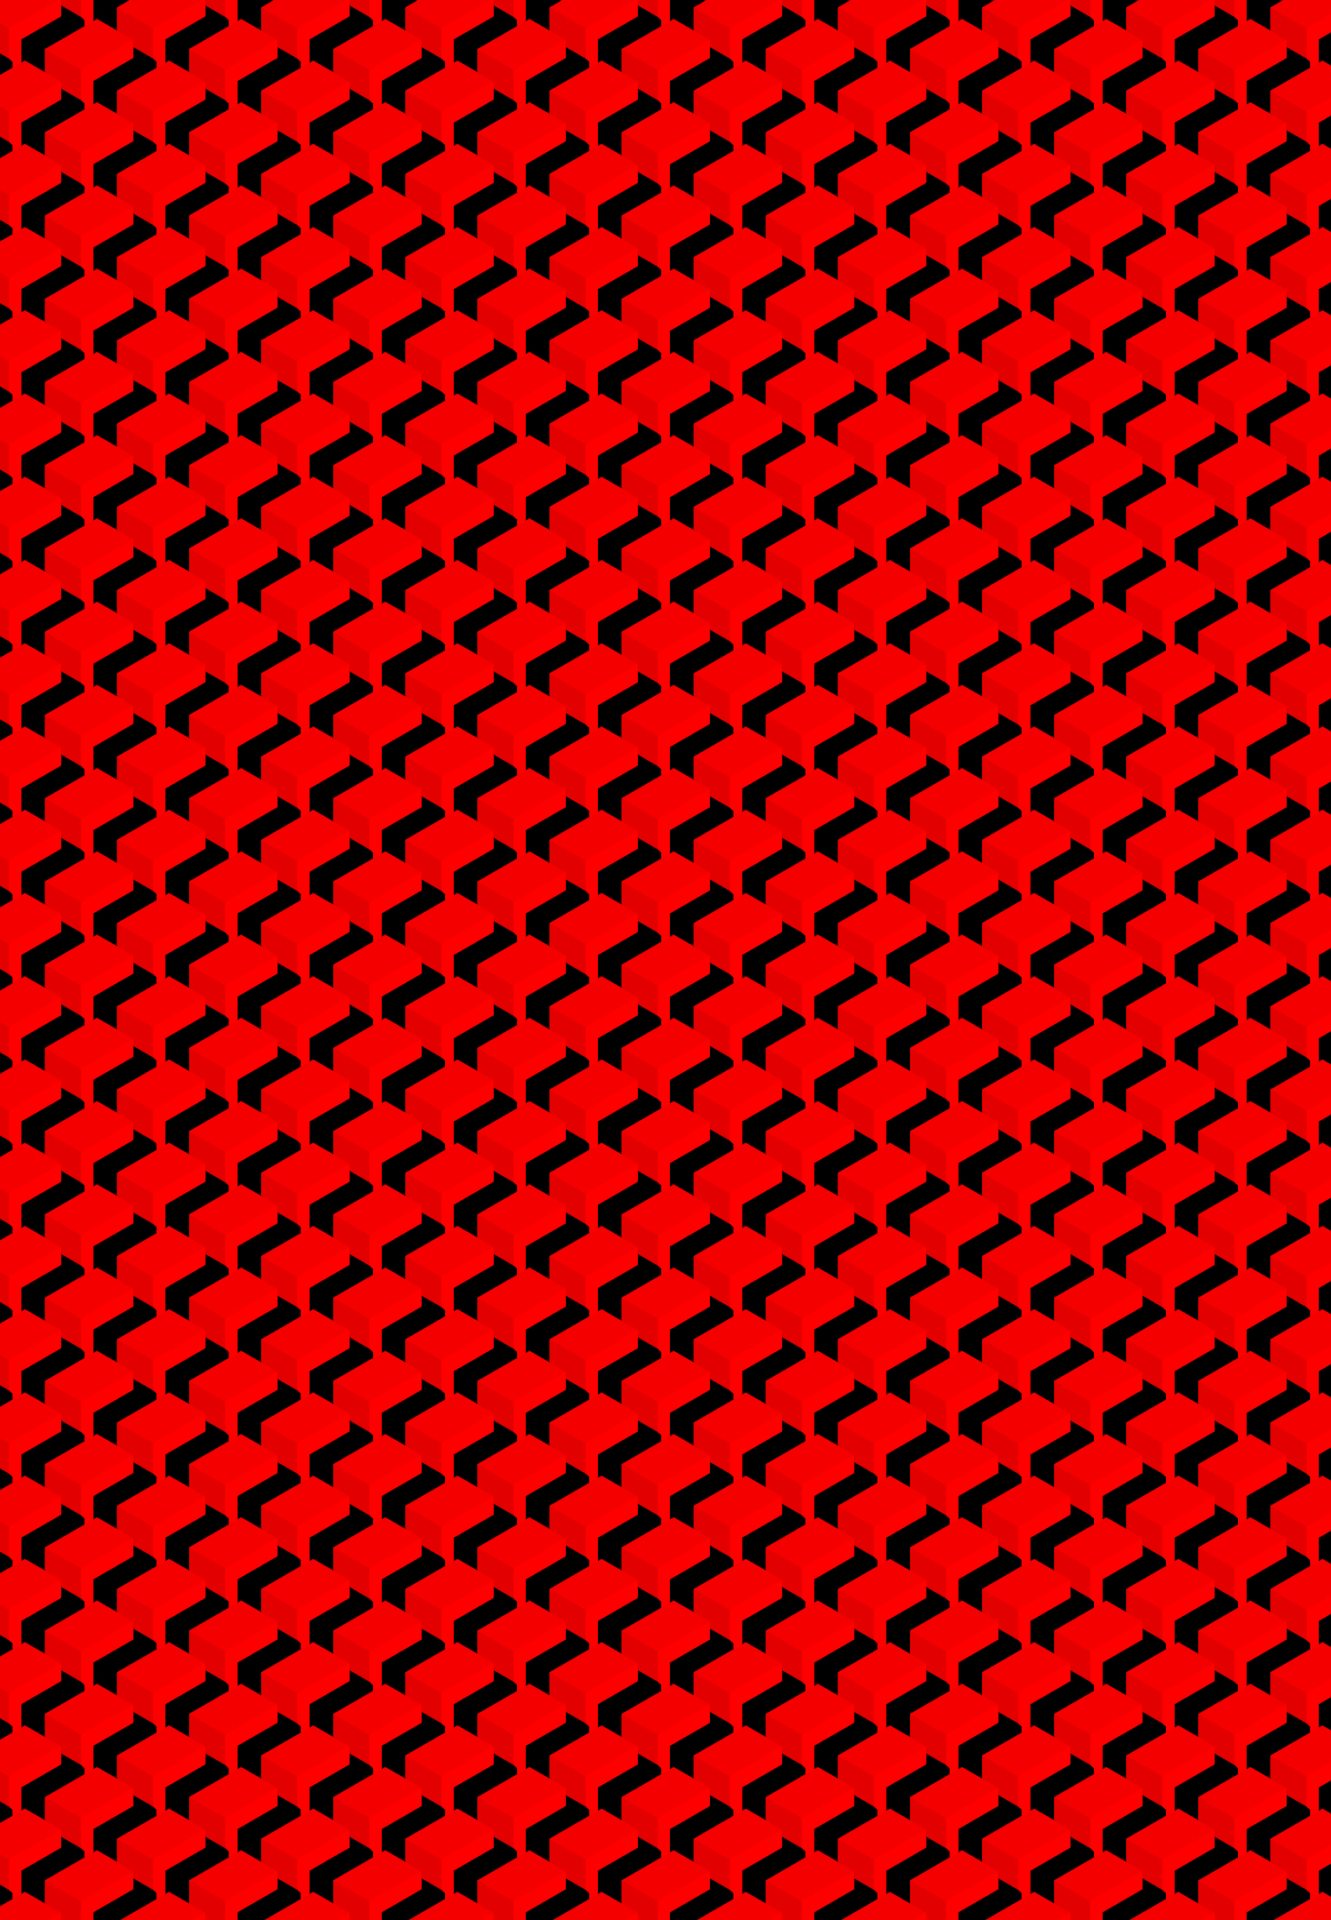 UVA LG red pattern